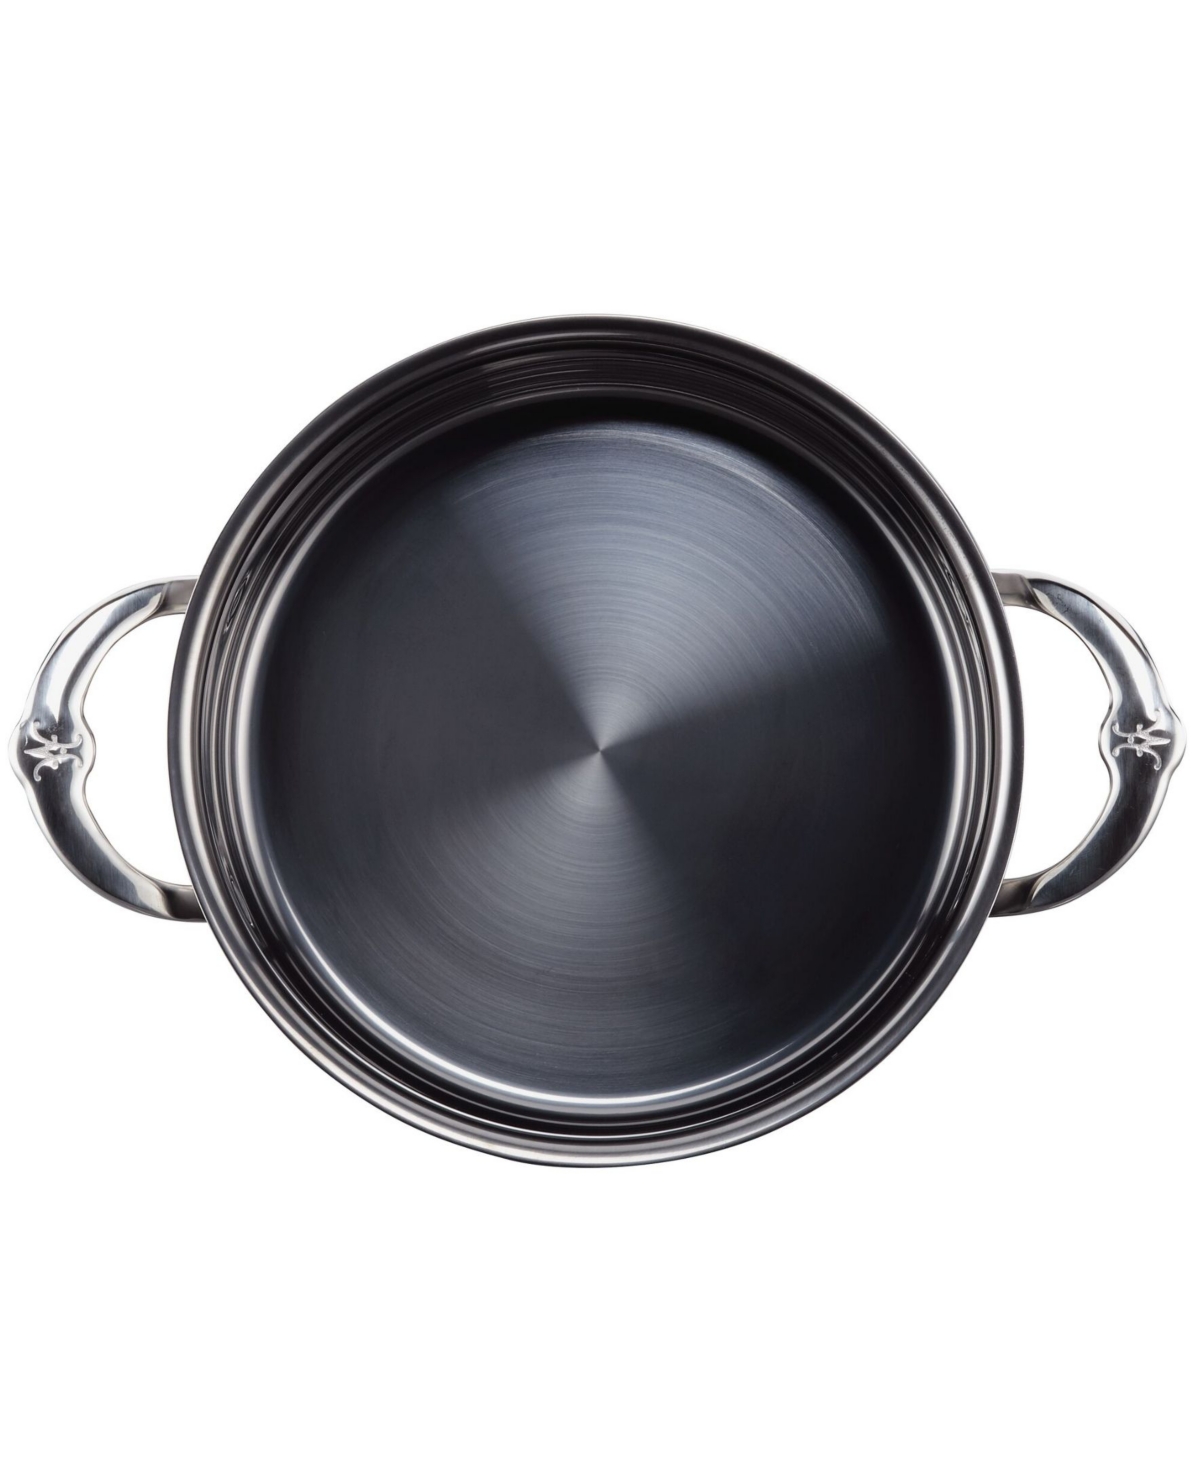 Shop Hestan Nanobond Titanium Stainless Steel 3-quart Covered Soup Pot